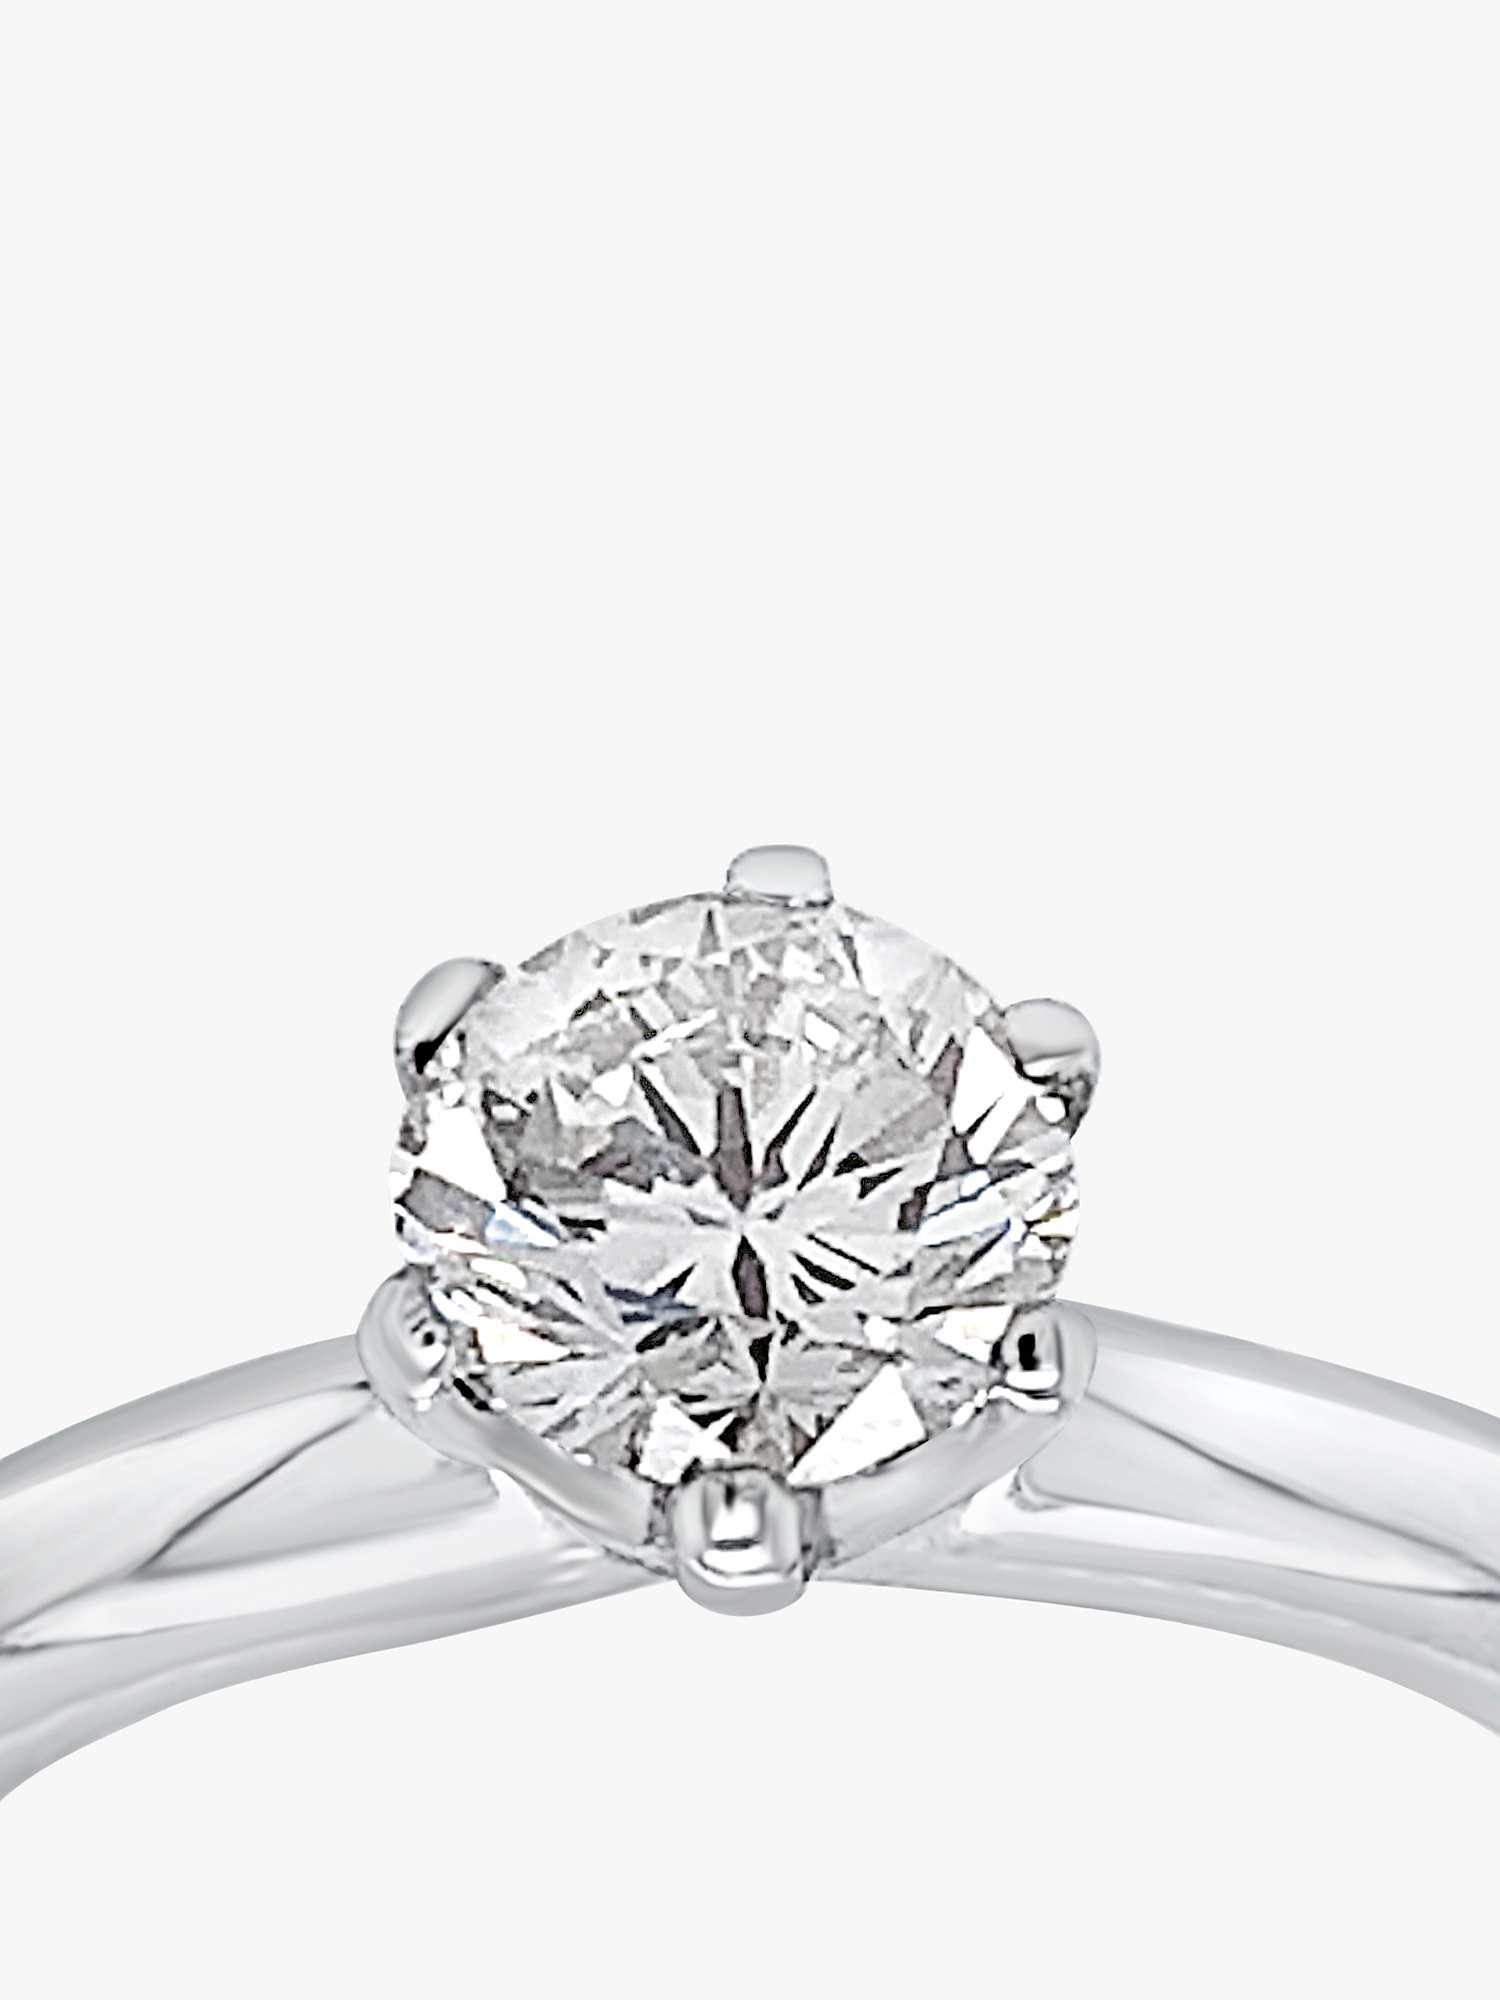 Buy Milton & Humble Jewellery Single Stone Round Diamond Second Hand Ring Online at johnlewis.com